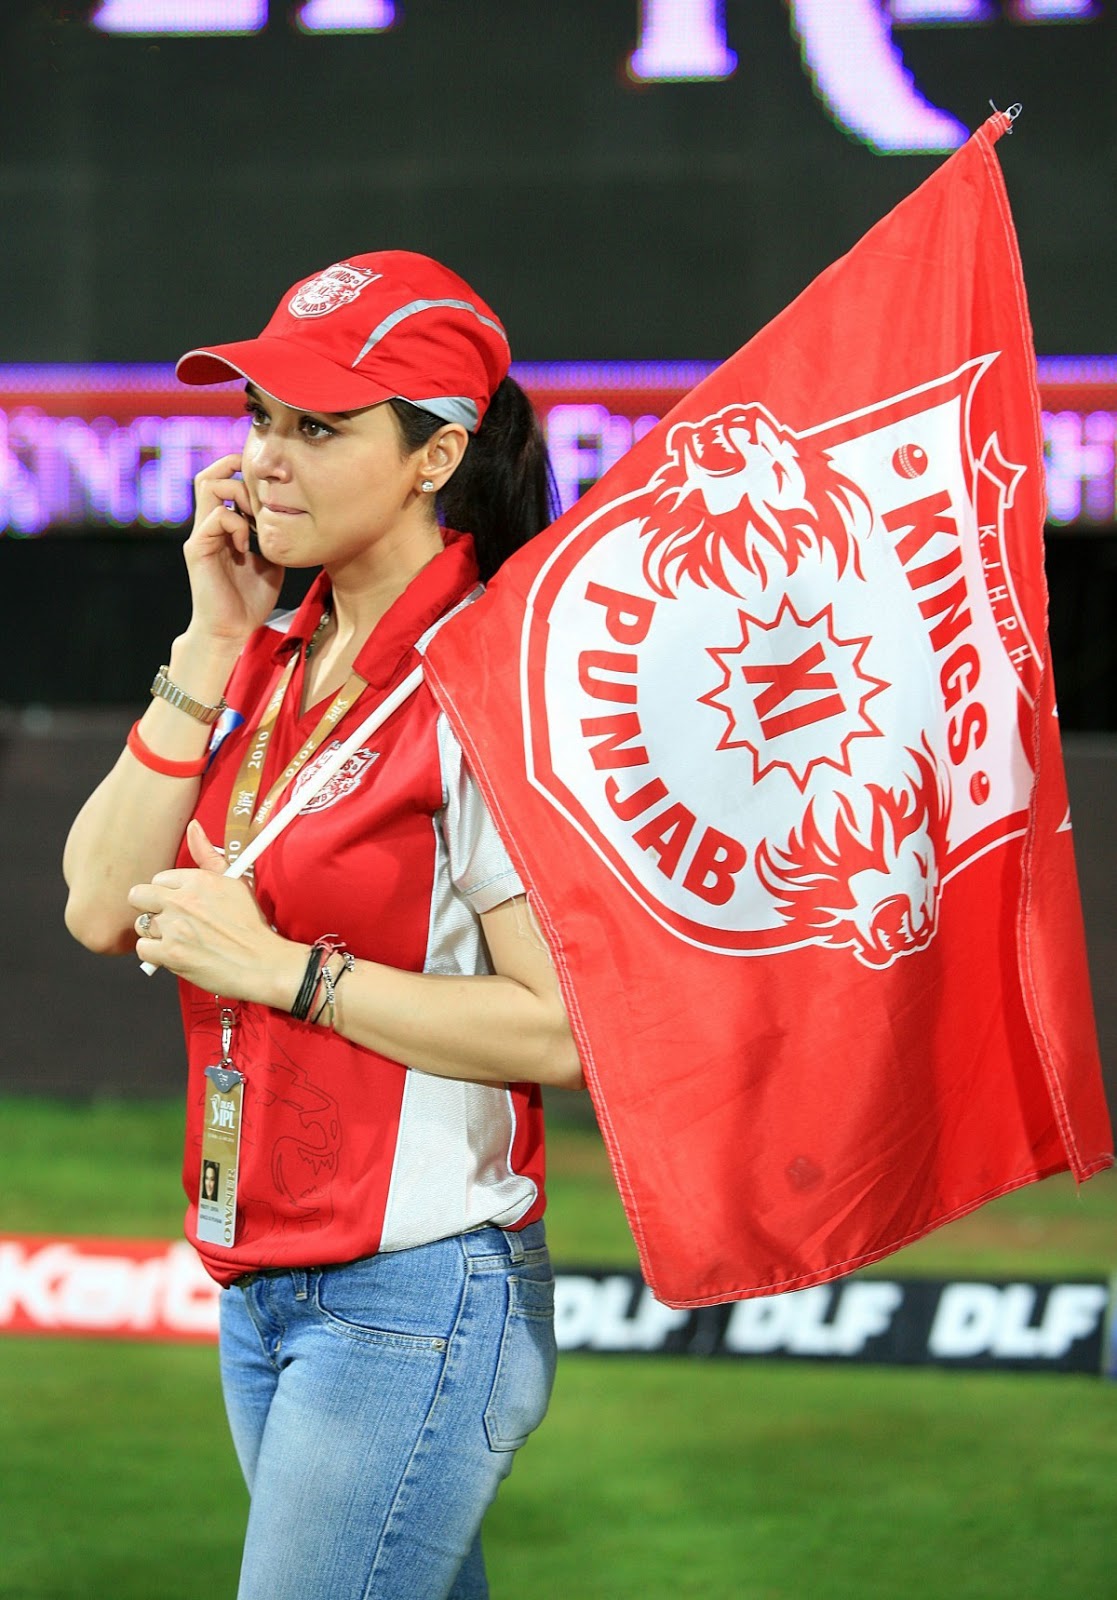 Free Cricket Wallpapers Preity Zinta cheer up wallpapers of IPL 2013